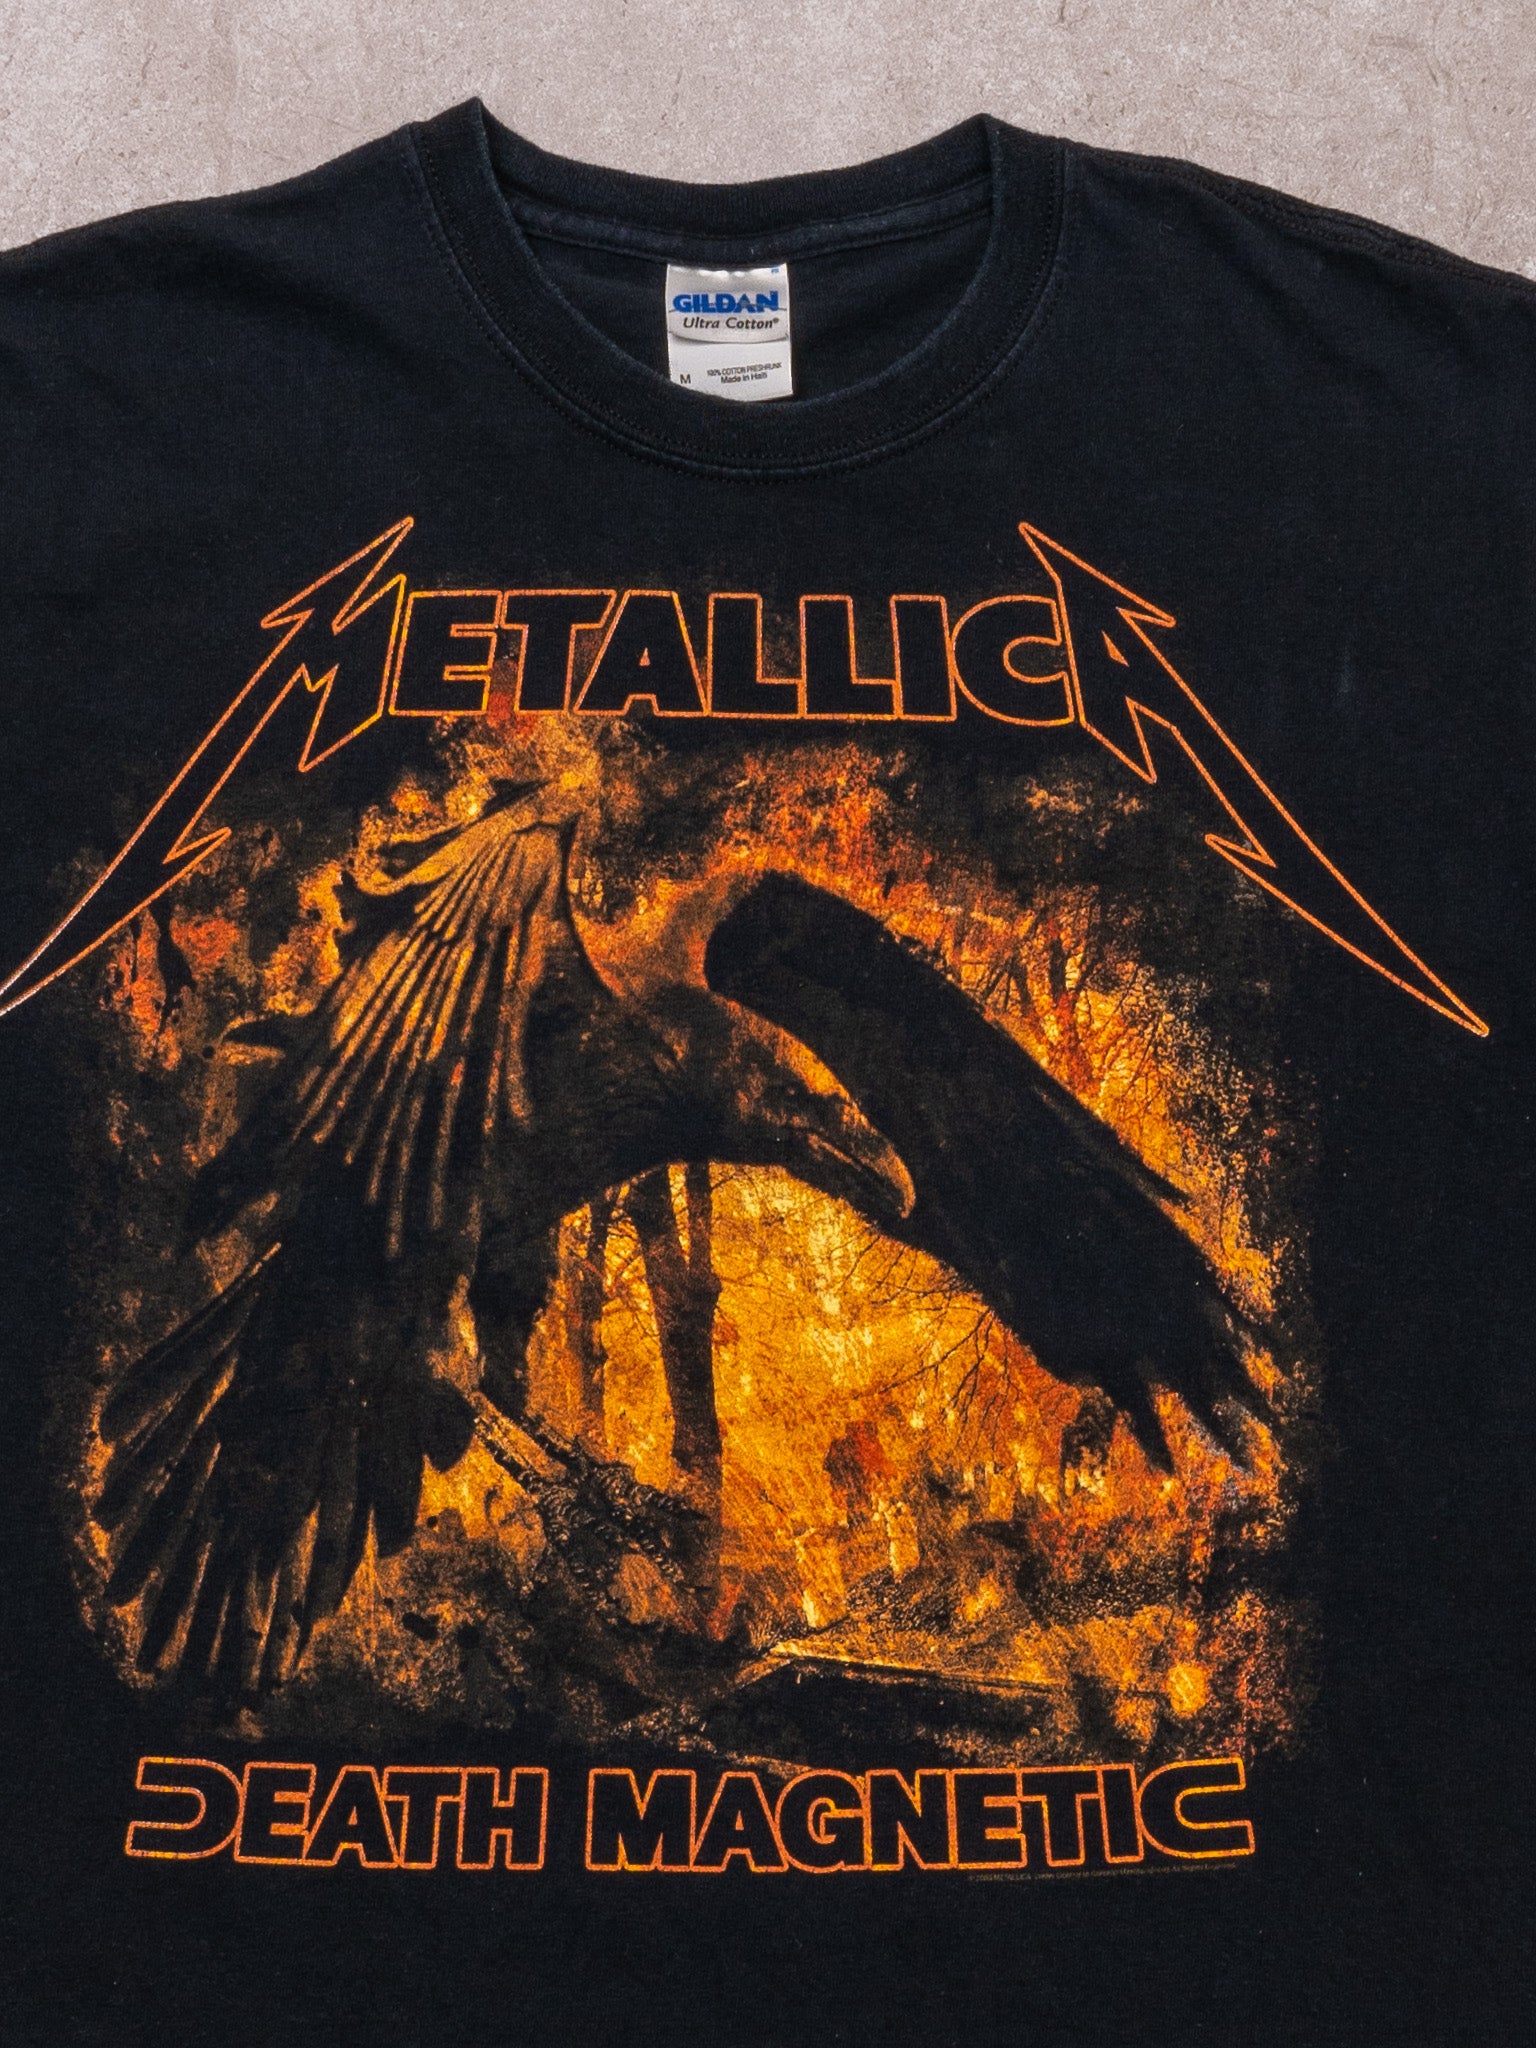 Vintage 00s Black Metallica Death Magnetic Tee (S)